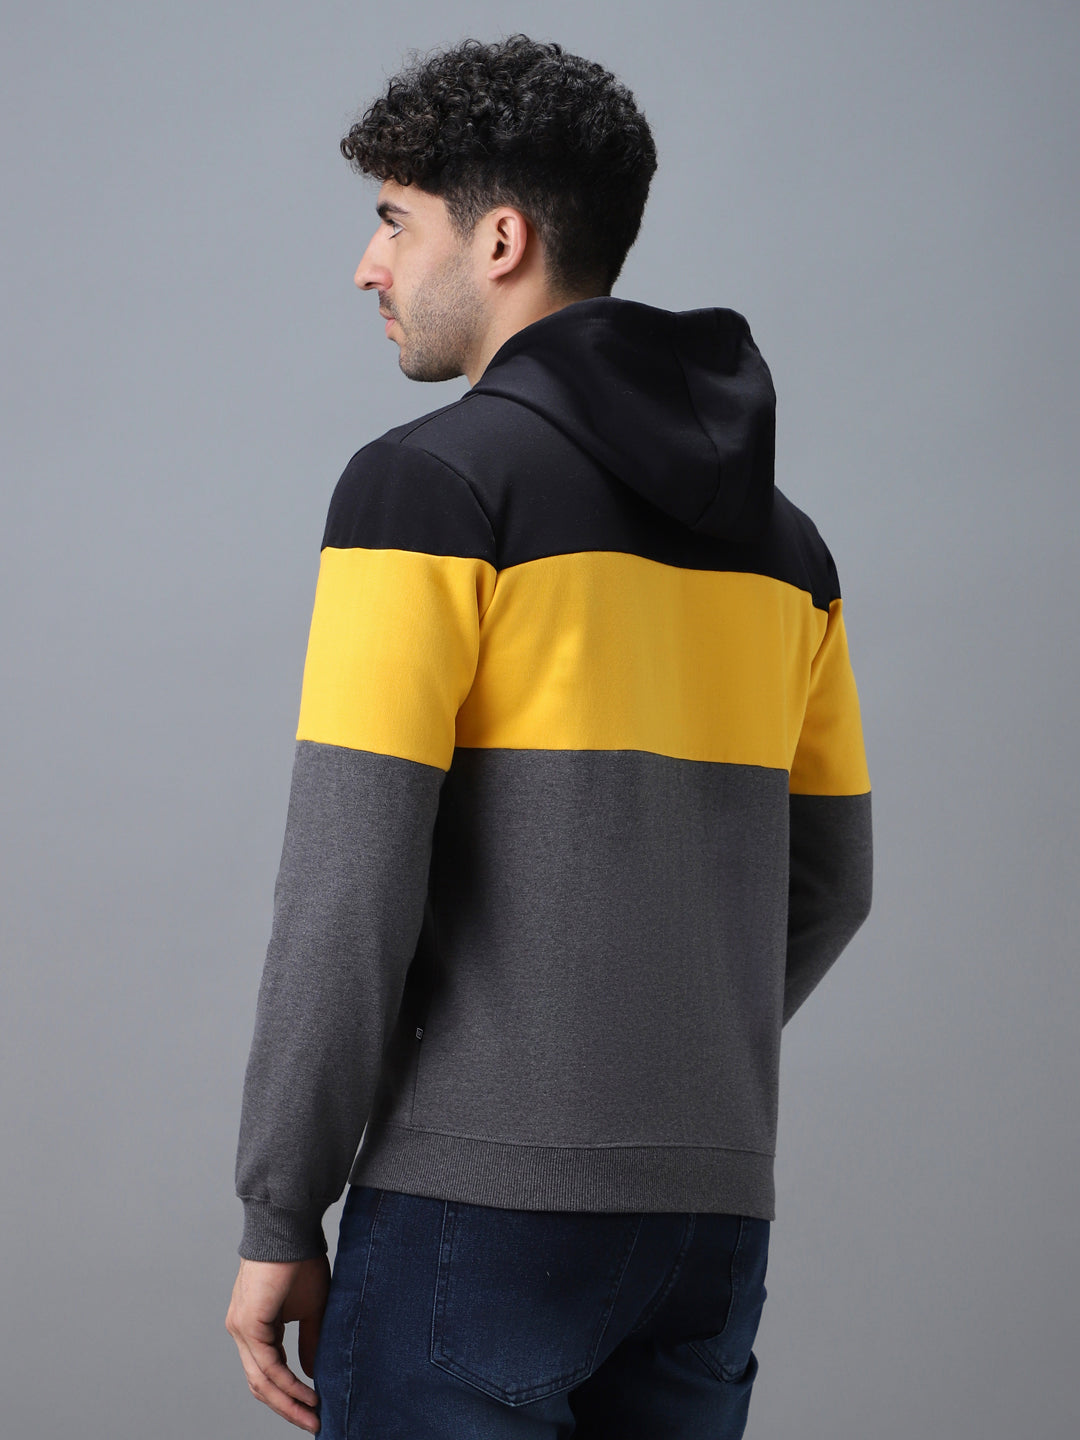 Men's Black, Yellow, Charcoal Cotton Zippered Hooded Sweatshirt